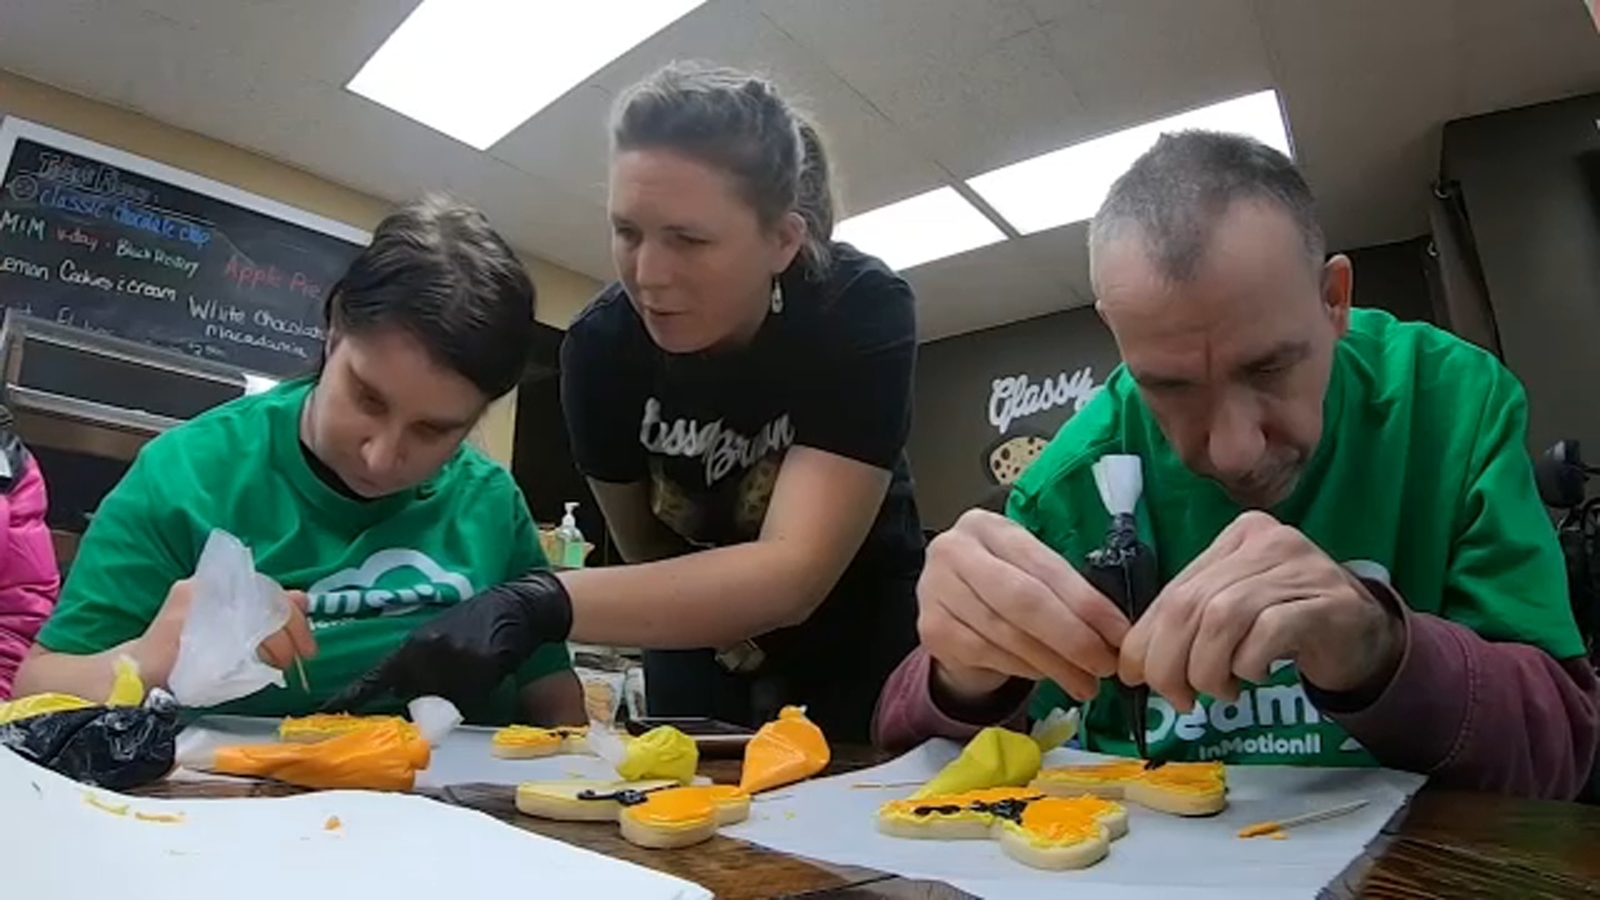 Burlington City’s Glassy Brown Cookies using decorating classes to serve community [Video]